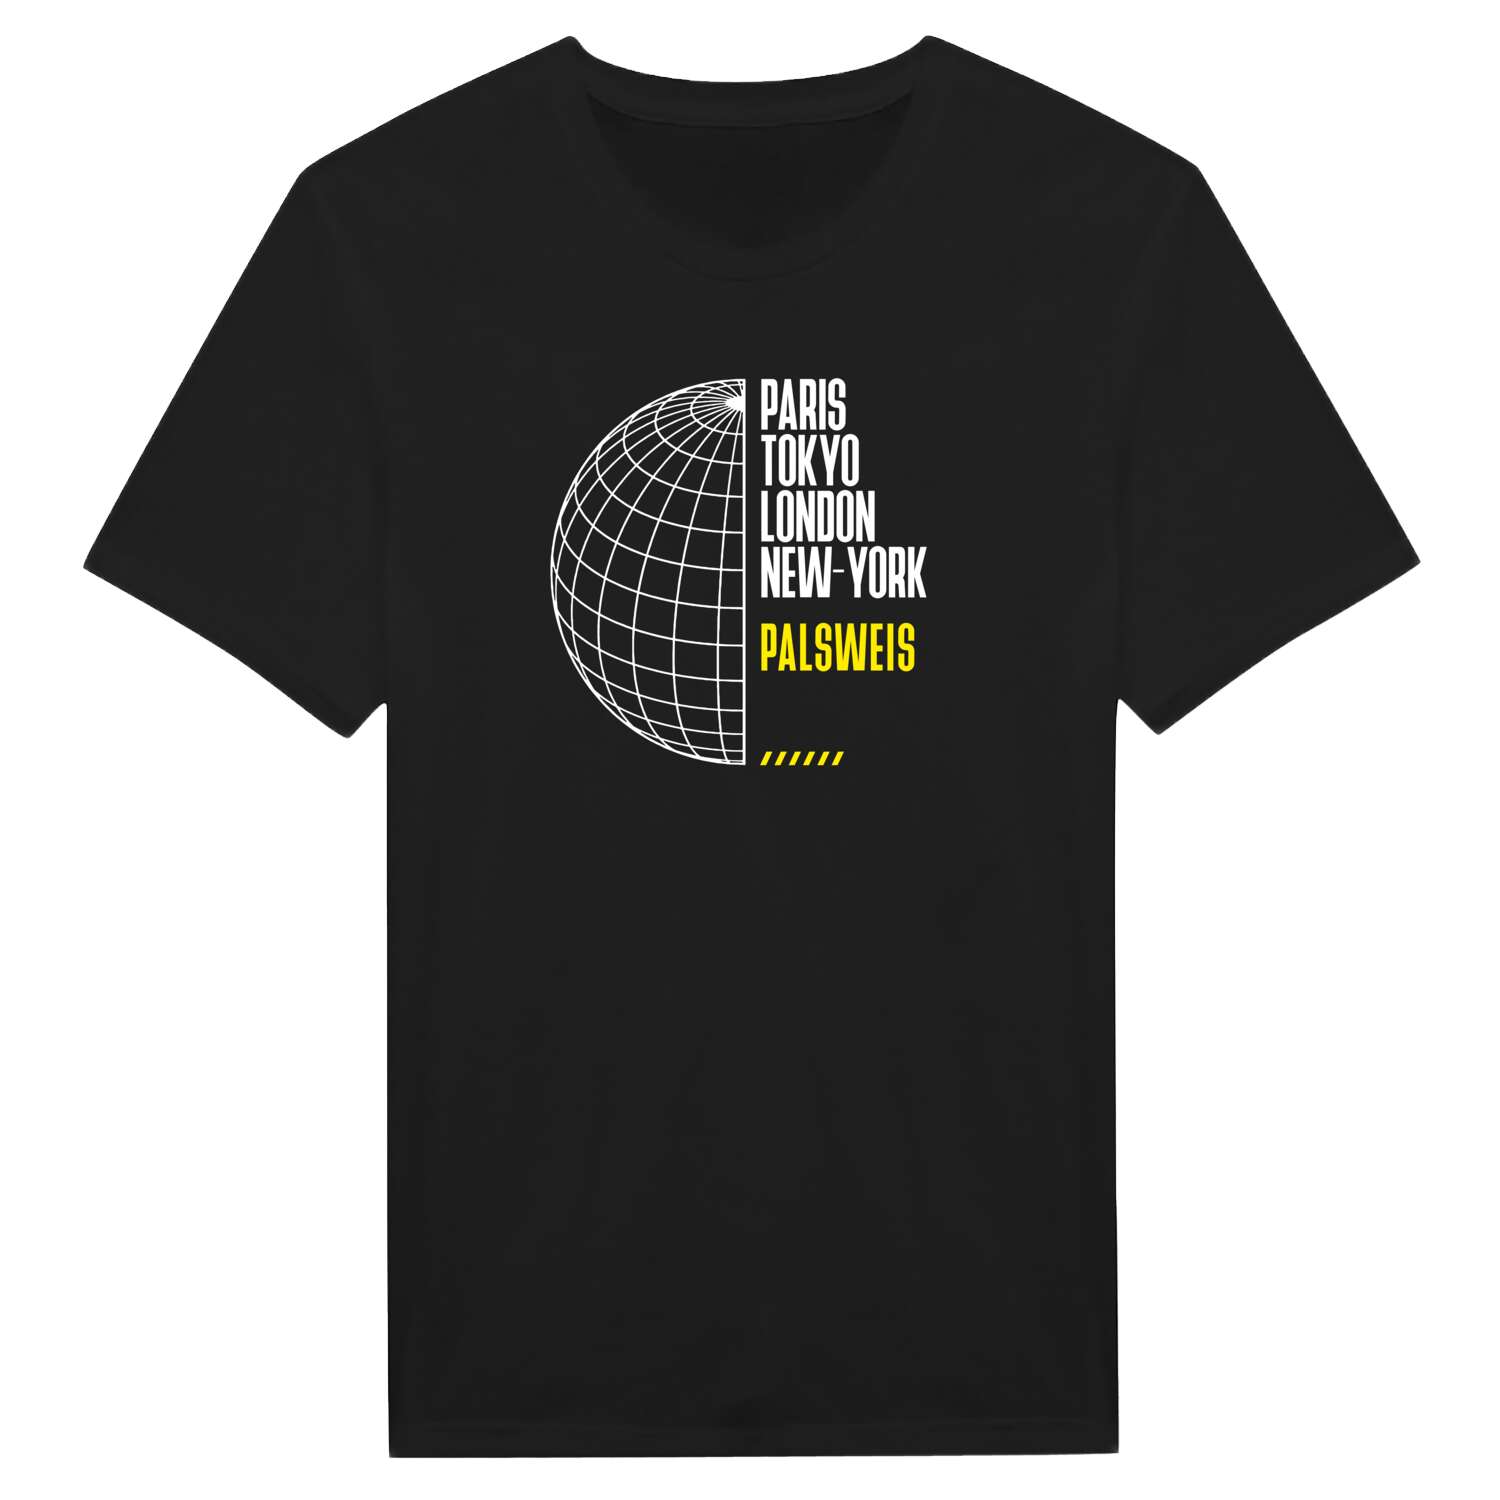 Palsweis T-Shirt »Paris Tokyo London«